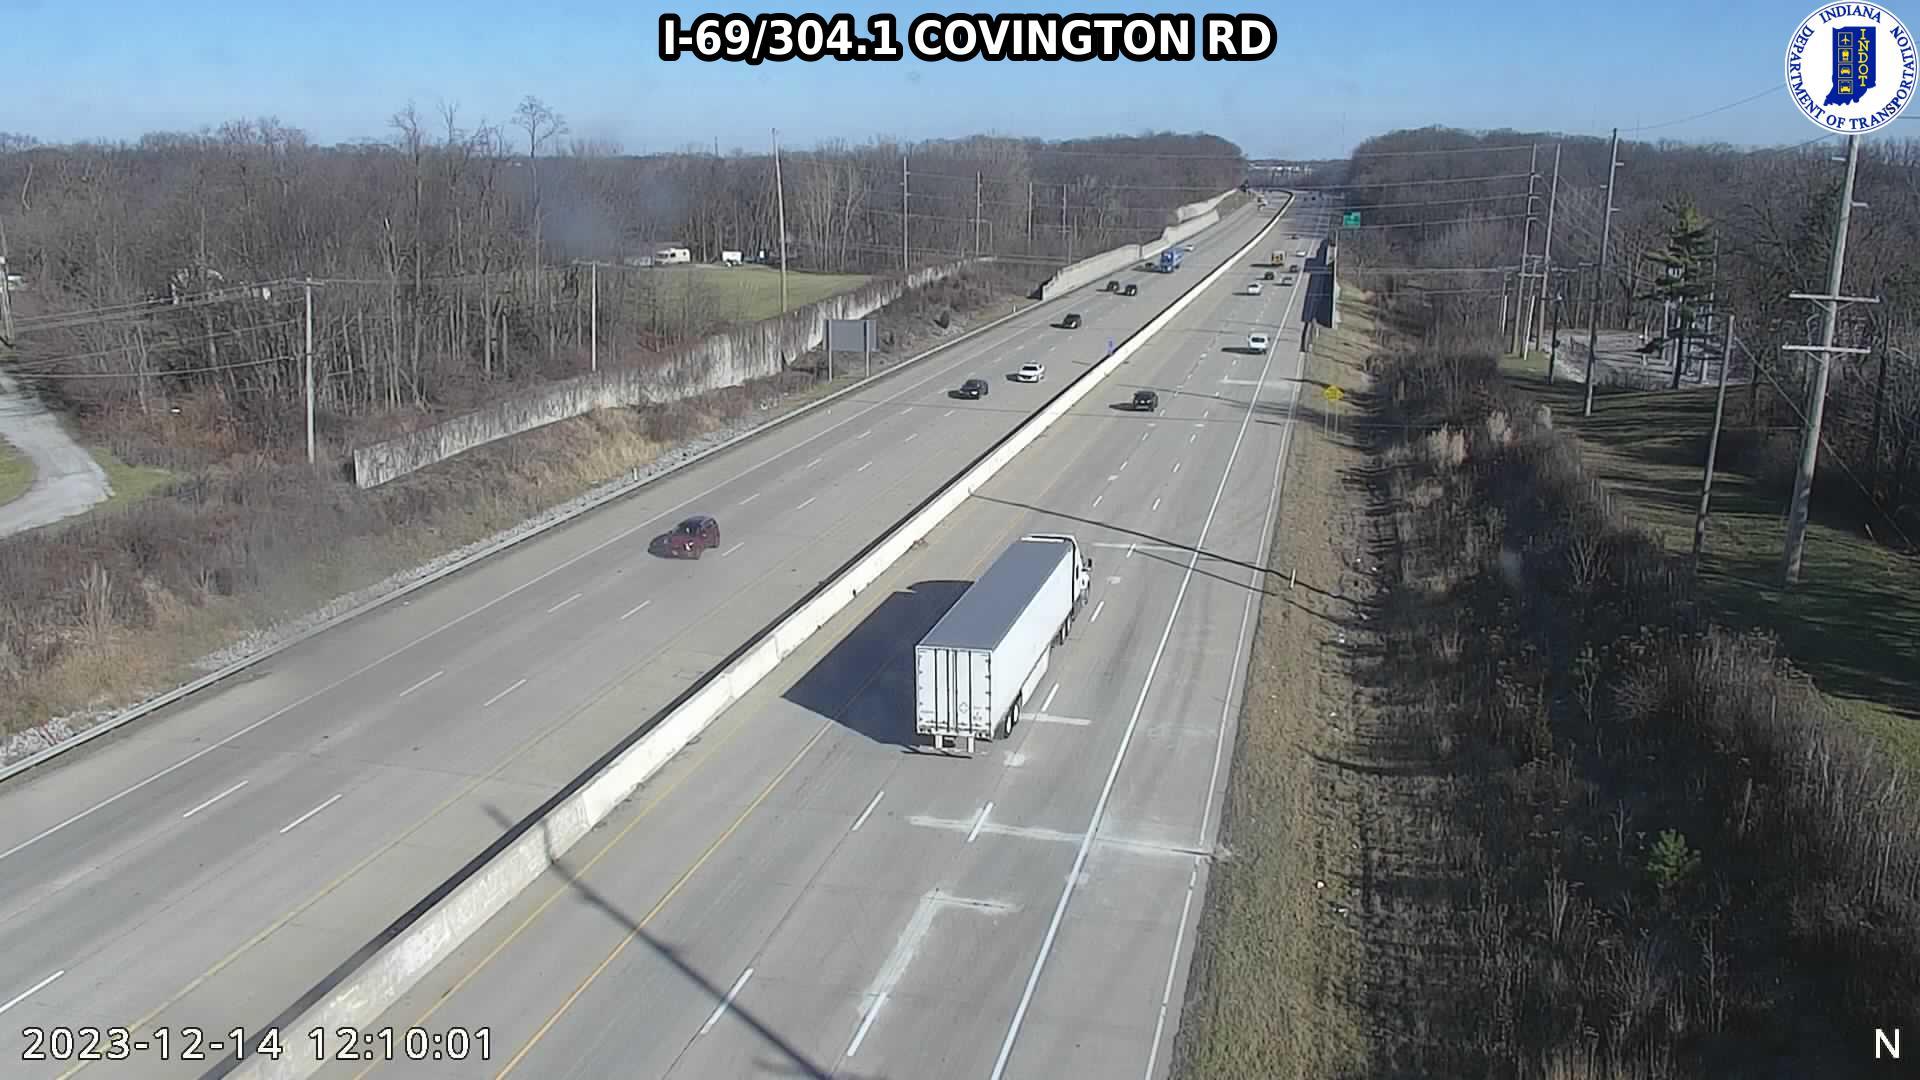 Fort Wayne: I-69: I-69/304.1 COVINGTON RD Traffic Camera